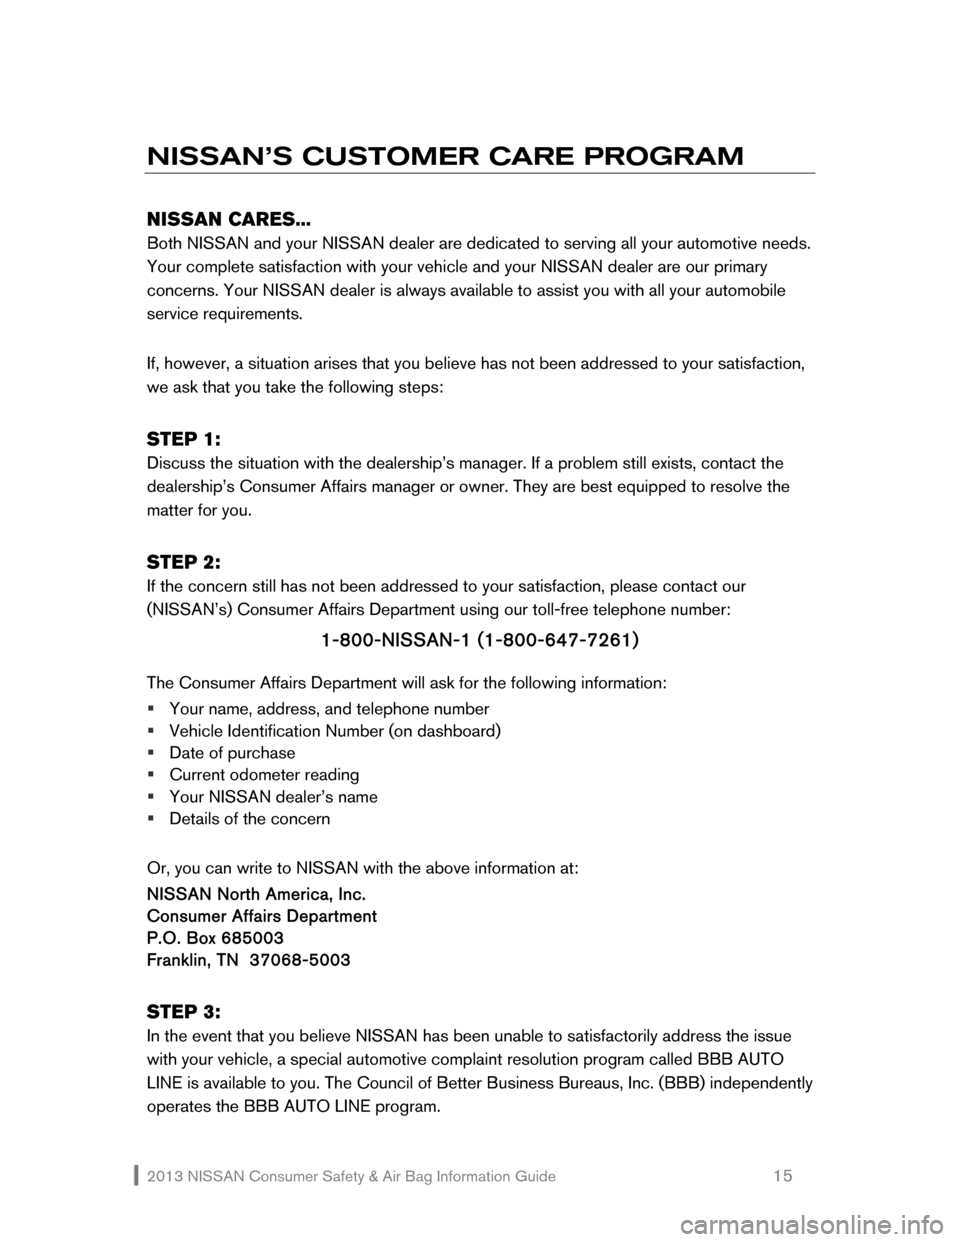 NISSAN JUKE 2013 F15 / 1.G Consumer Safety Air Bag Information Guide 2013 NISSAN Consumer Safety & Air Bag Information Guide                                                   15 
NISSAN’S CUSTOMER CARE PROGRAM 
 
NISSAN CARES... 
Both NISSAN and your NISSAN dealer ar